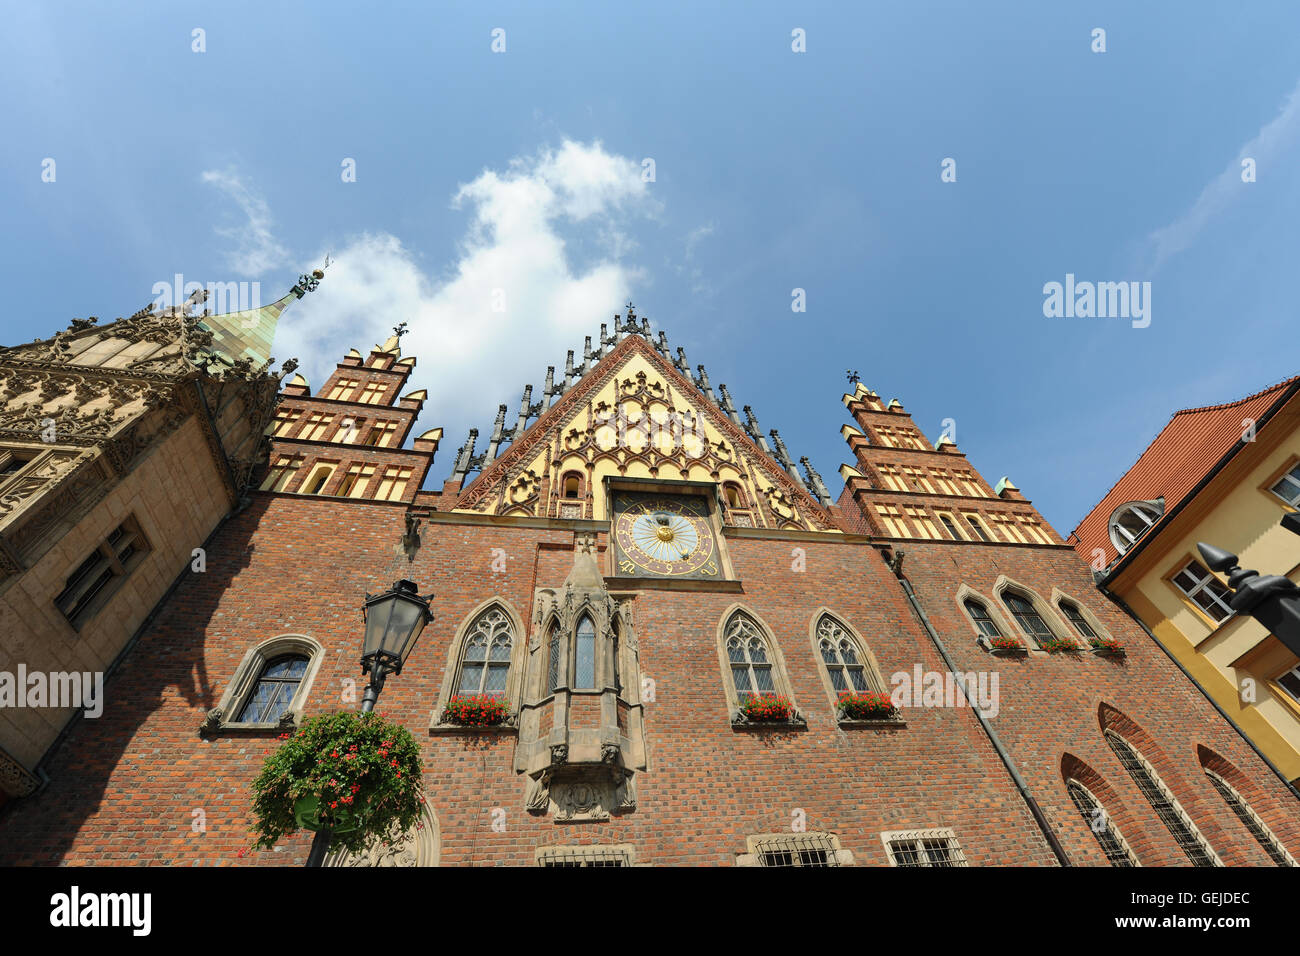 Medieval architecture in Market Square, Wroclaw, Poland Stock Photo